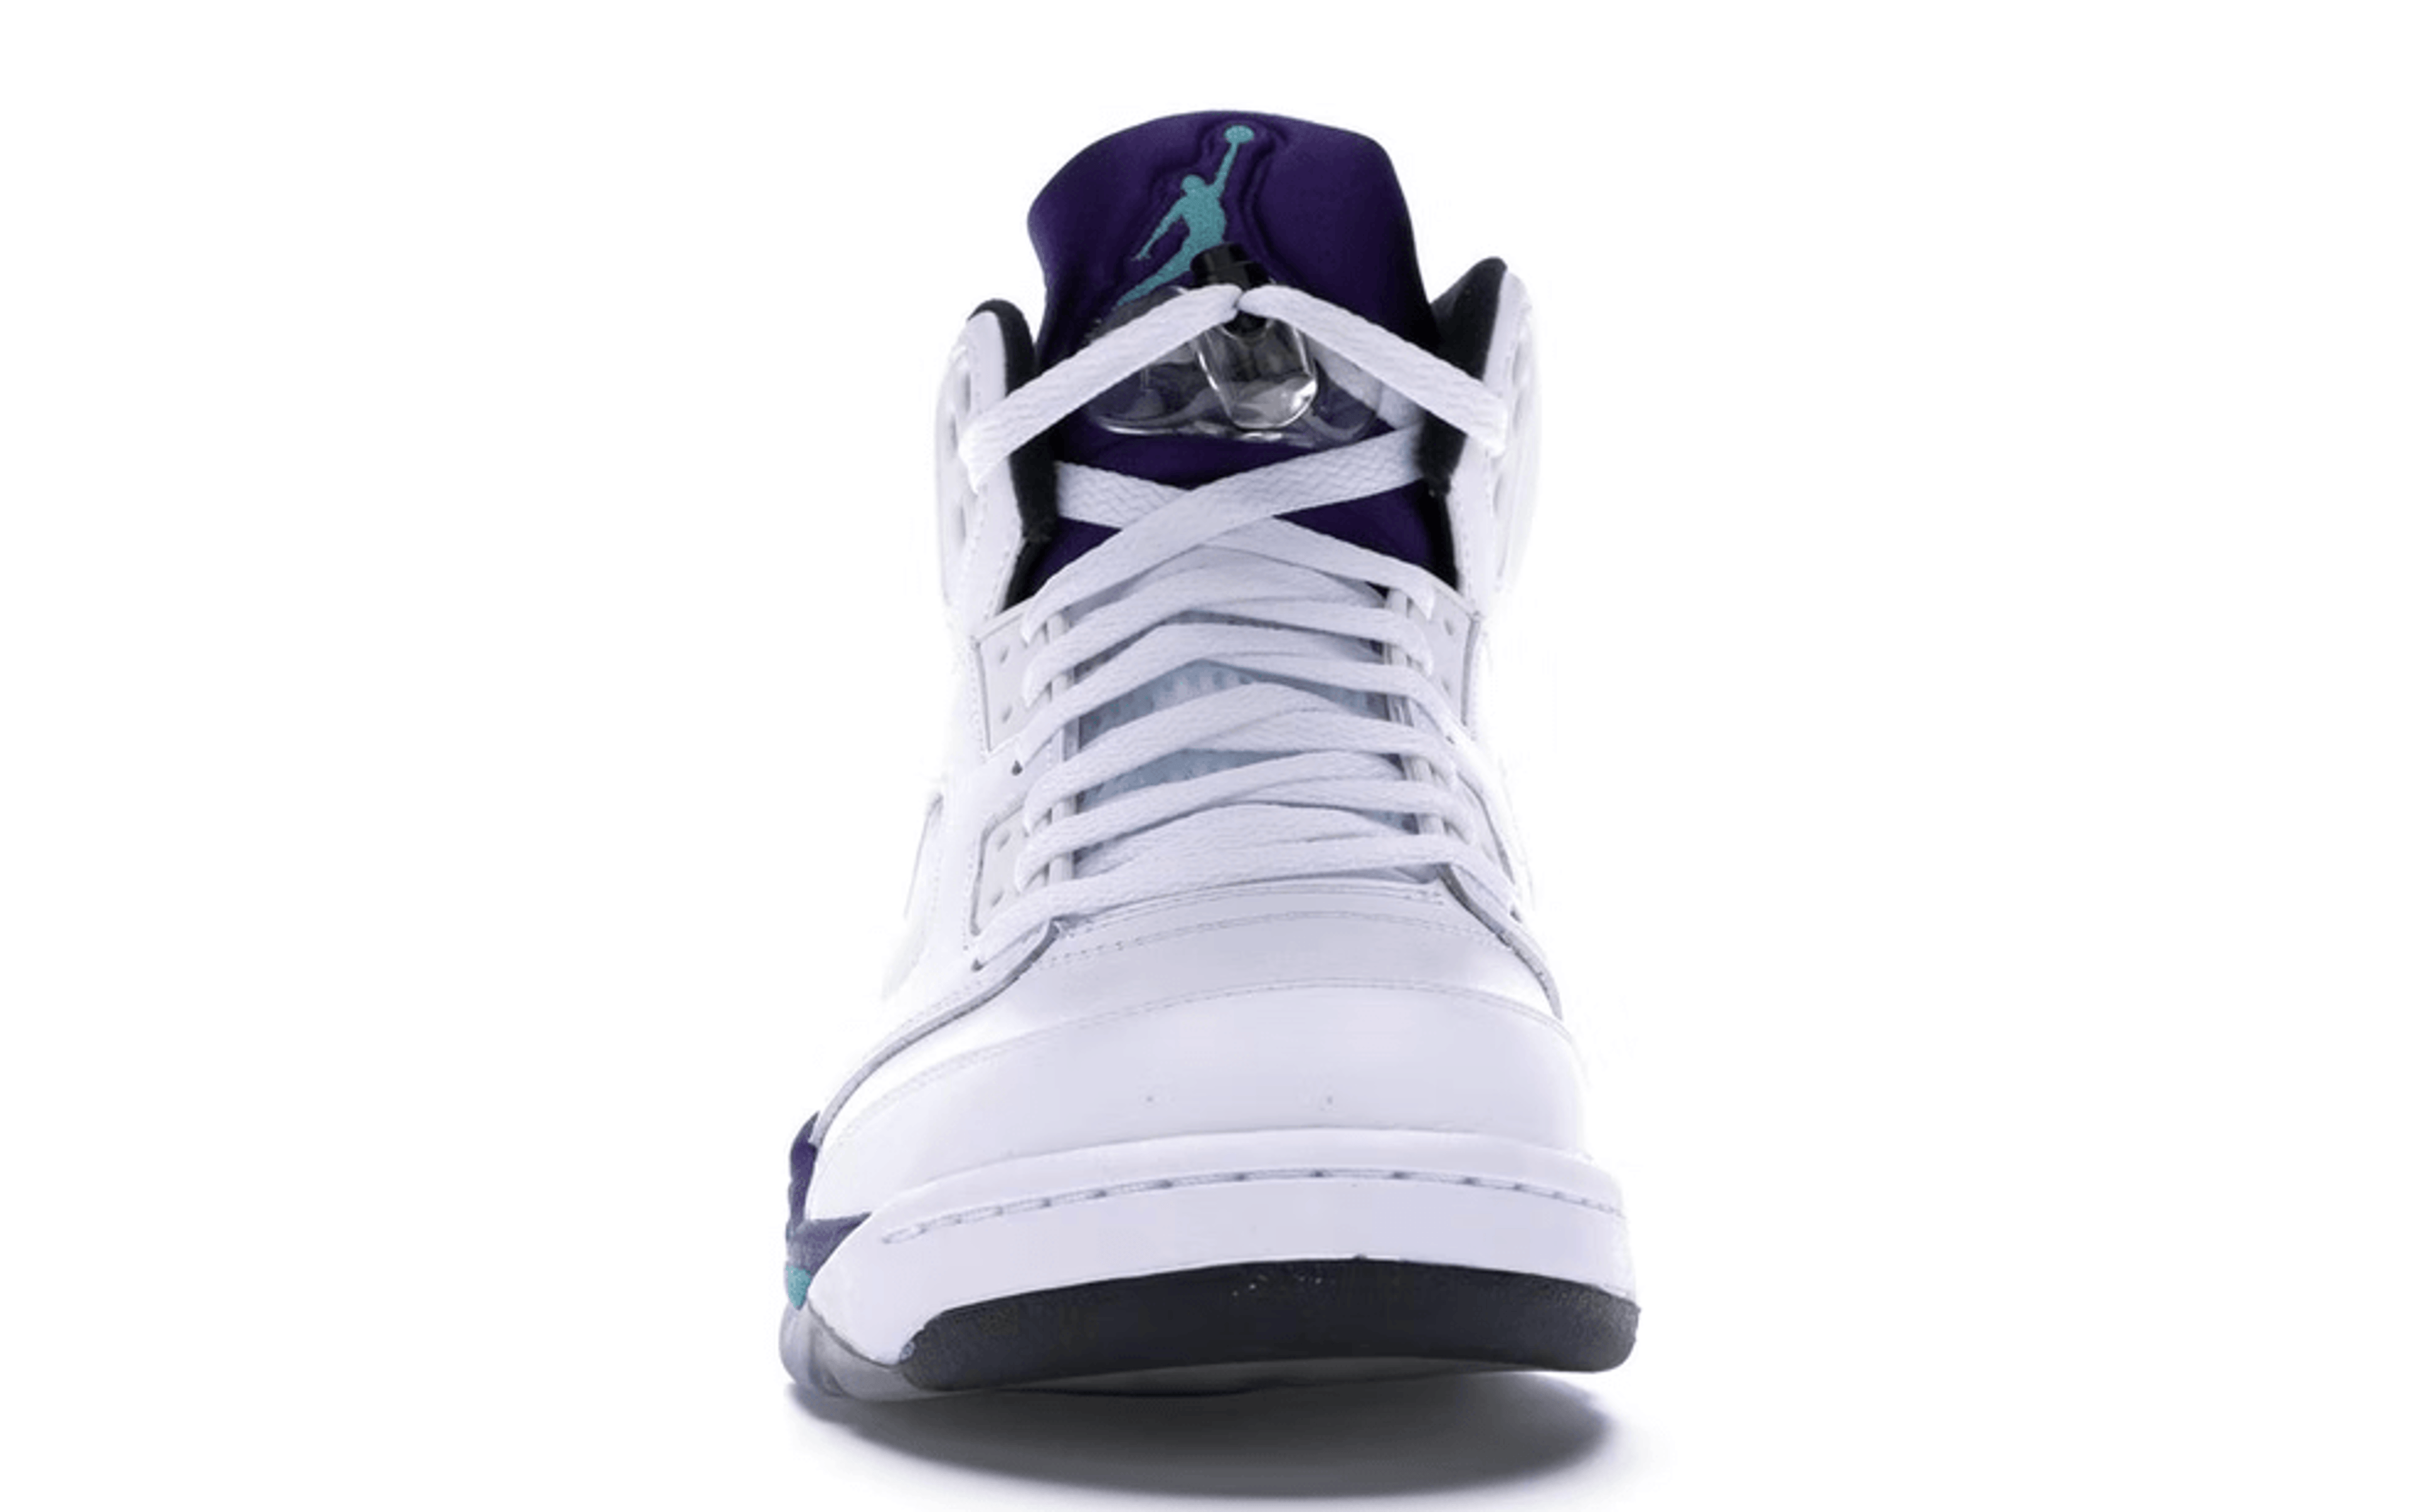 Nike Mens Air Jordan 5 Retro White Grape White/Emerald Grape 136027-108 